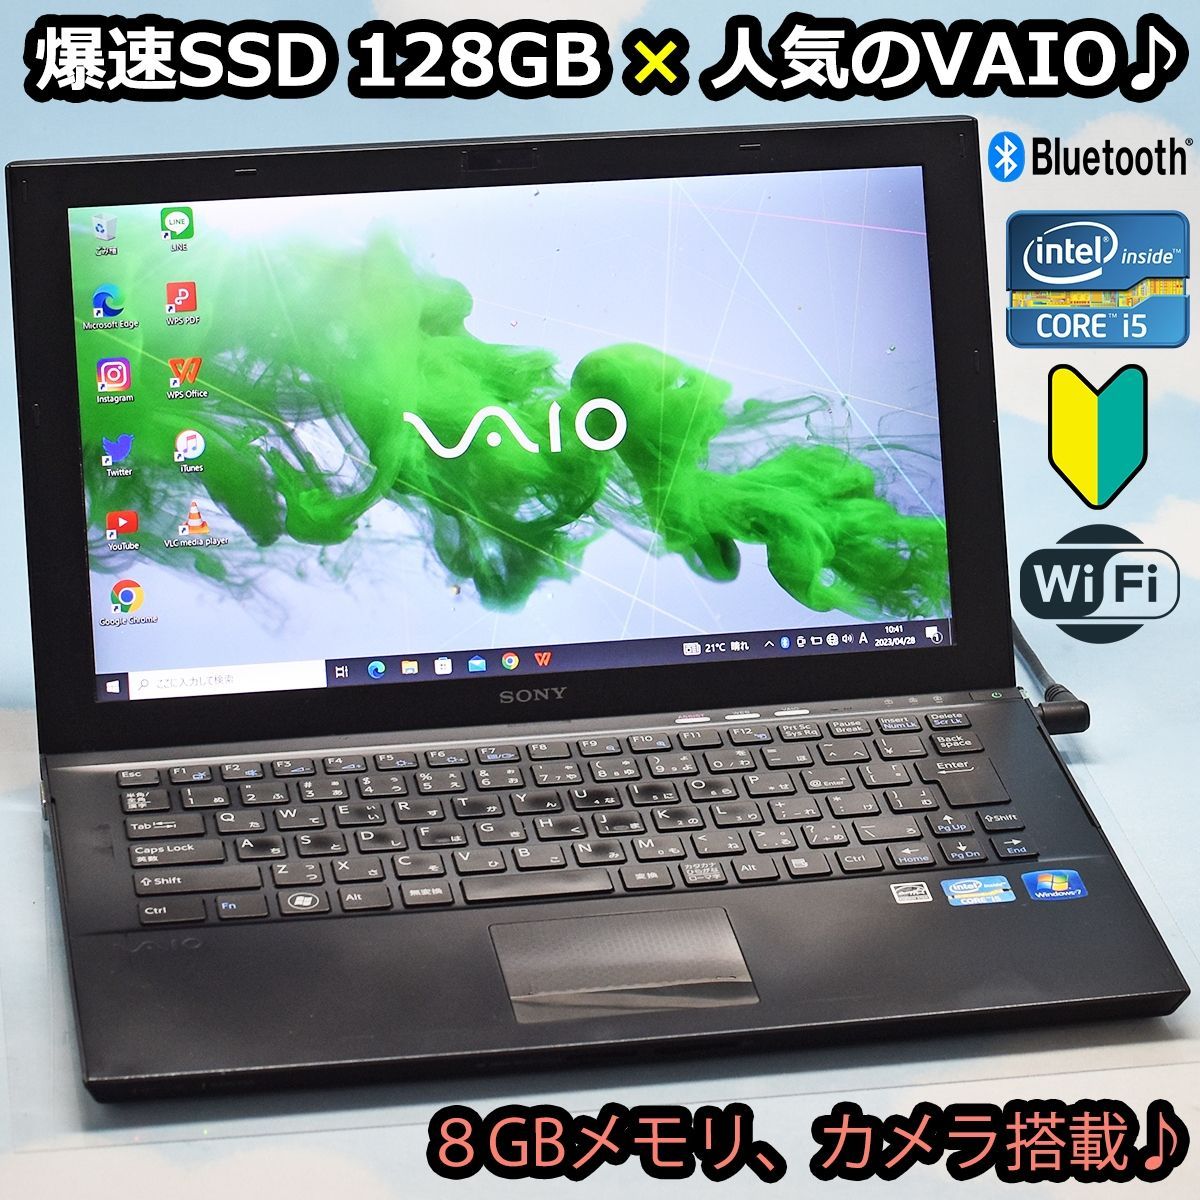 SONY VAIO☆ 爆速128GB SSD、8GBメモリ、Core i5、Bluetooth、カメラ